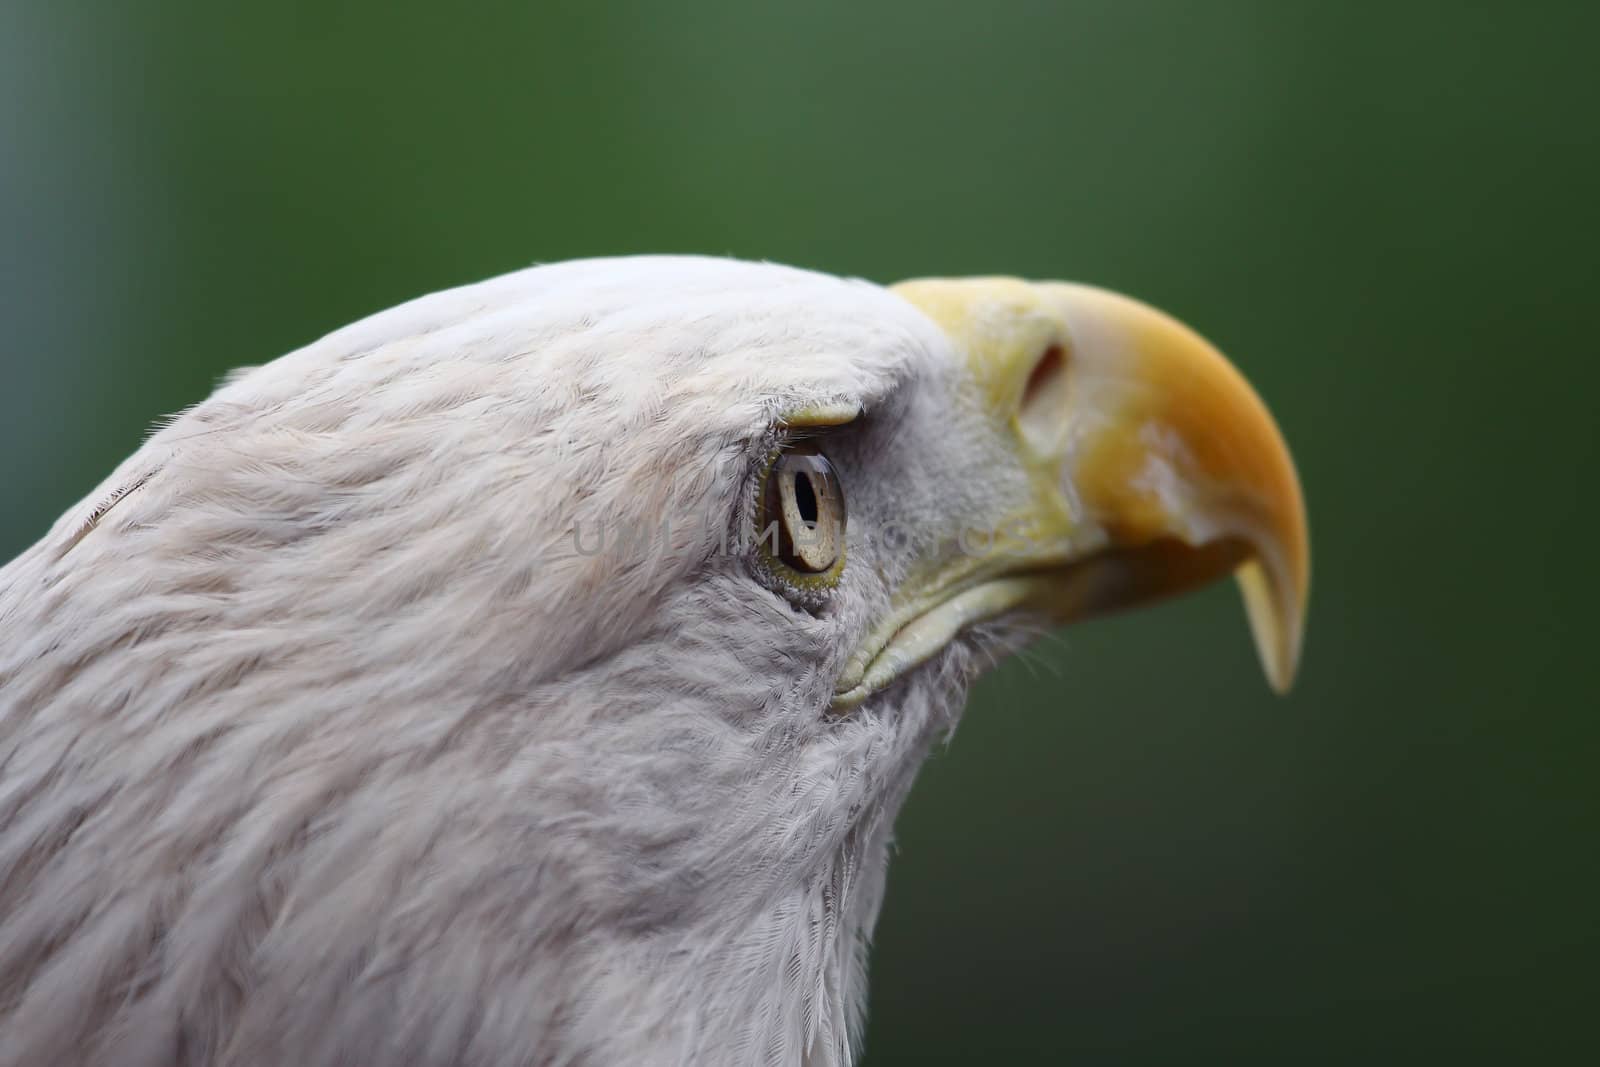 Close up head shot of an American Bald Eagle.